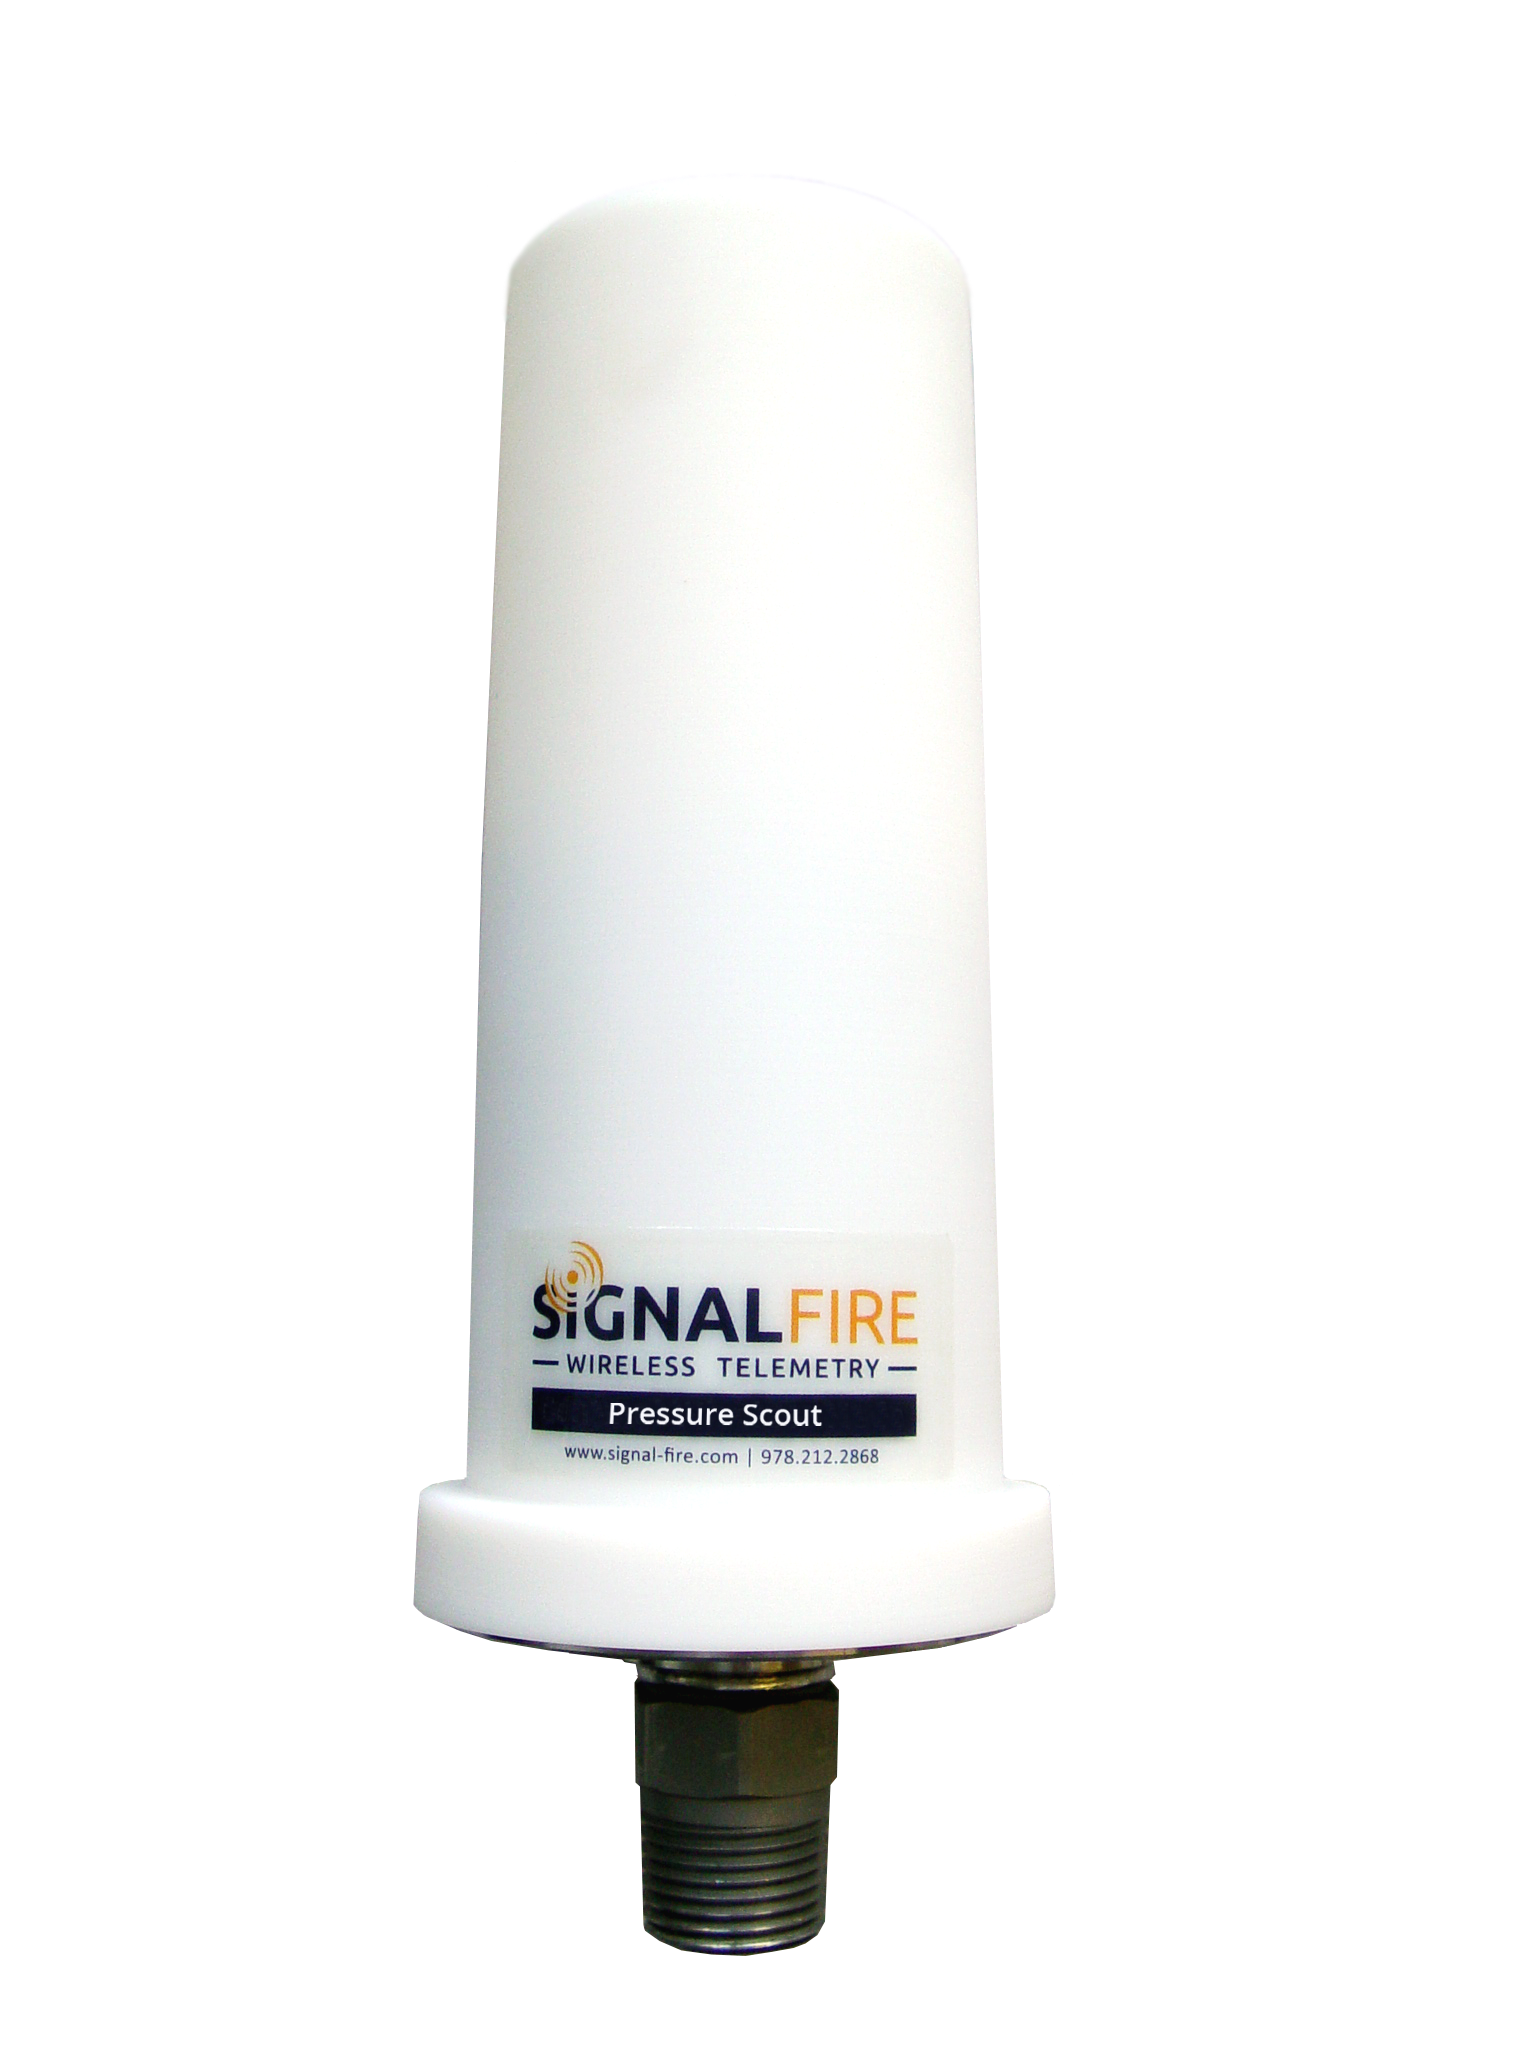 SignalFire Pressure Scout Intrinsically Safe Wireless Pressure Sensor|SignalFire Pressure Scout Intrinsically Safe Wireless Pressure Sensor